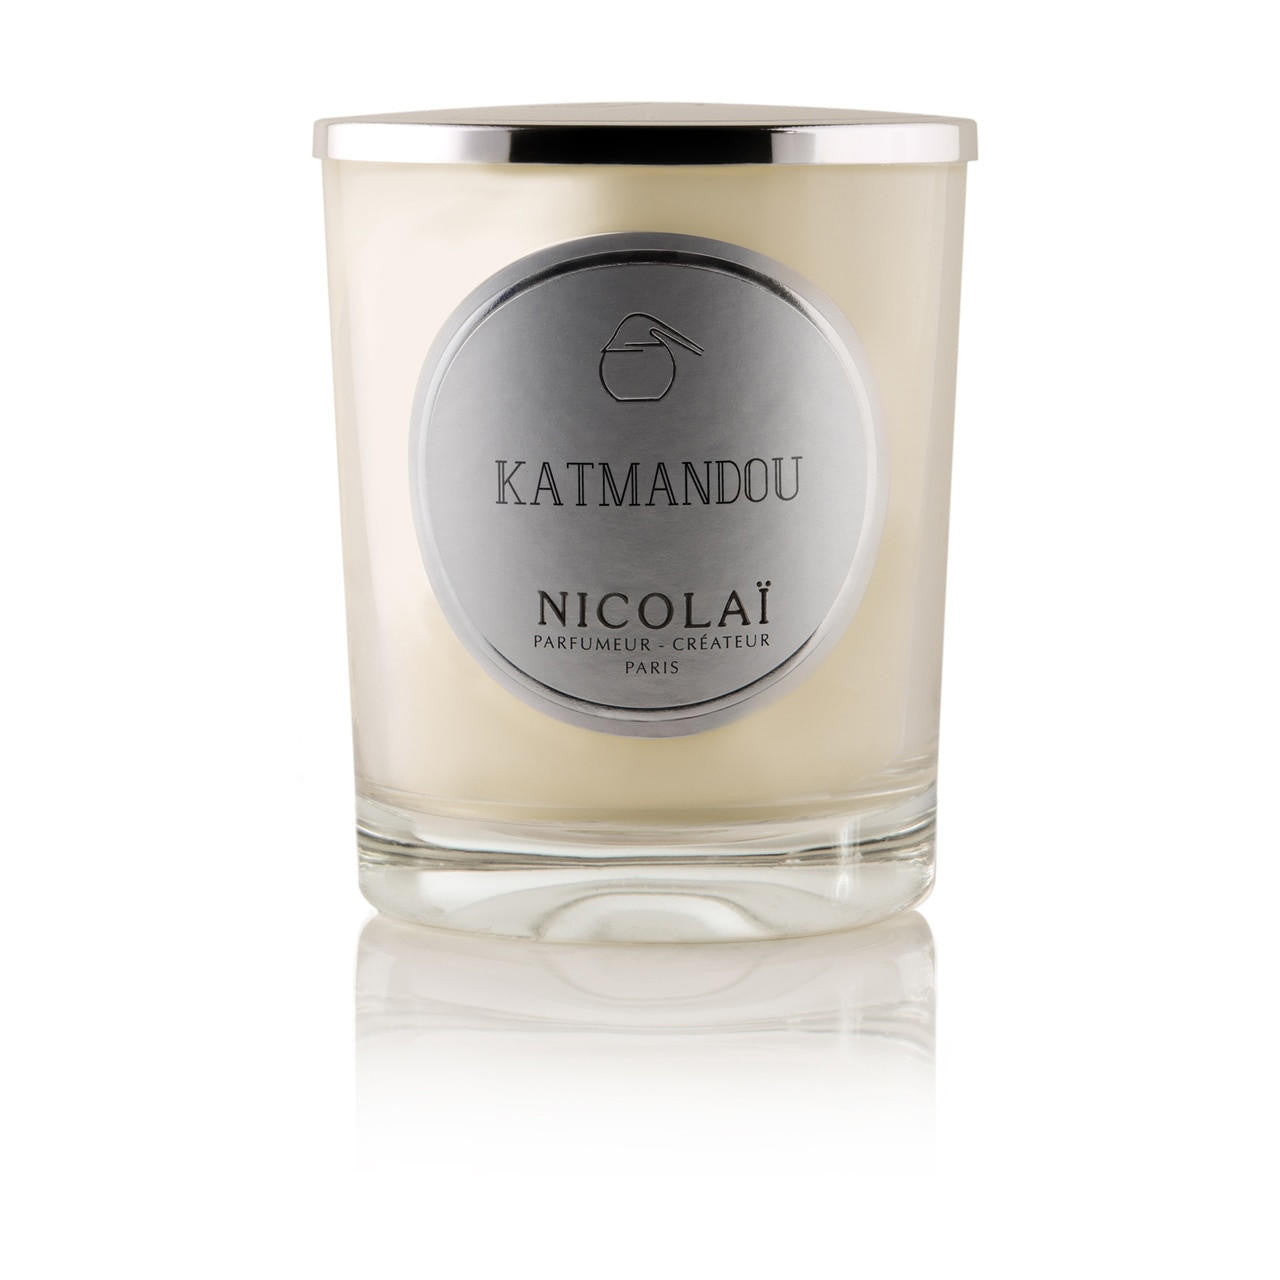  Parfums de Nicolai Katmandou Candle 